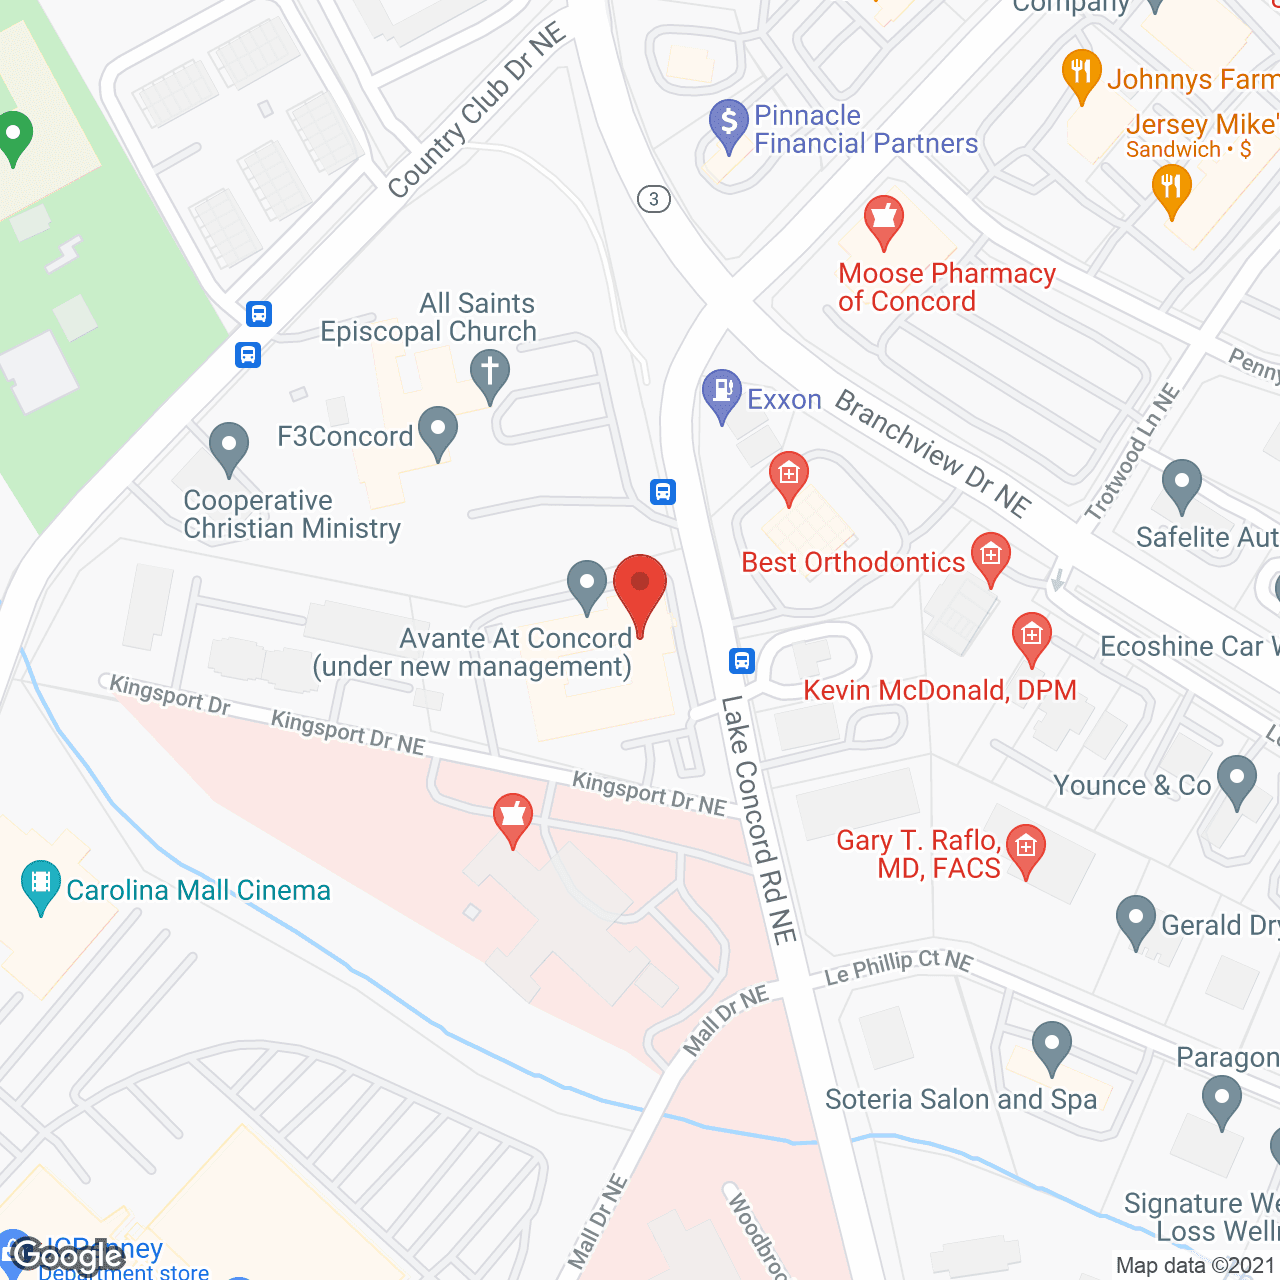 Avante' At Concord in google map